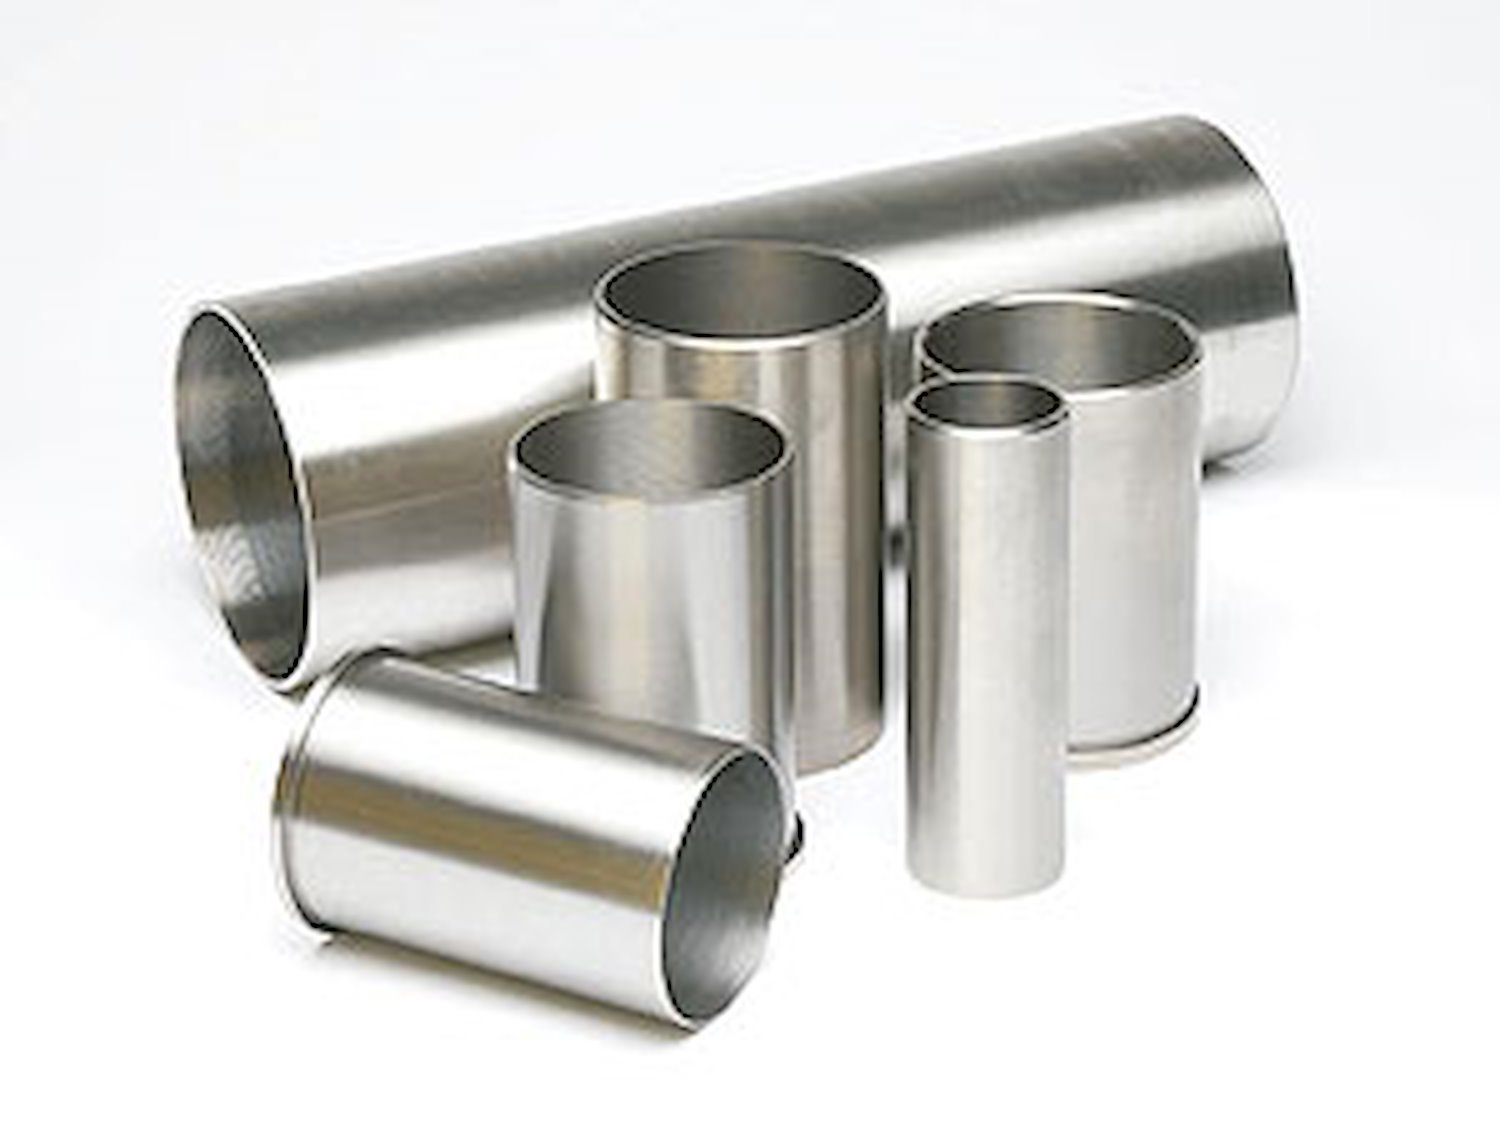 Cylinder Sleeve Bore: 4.0625"